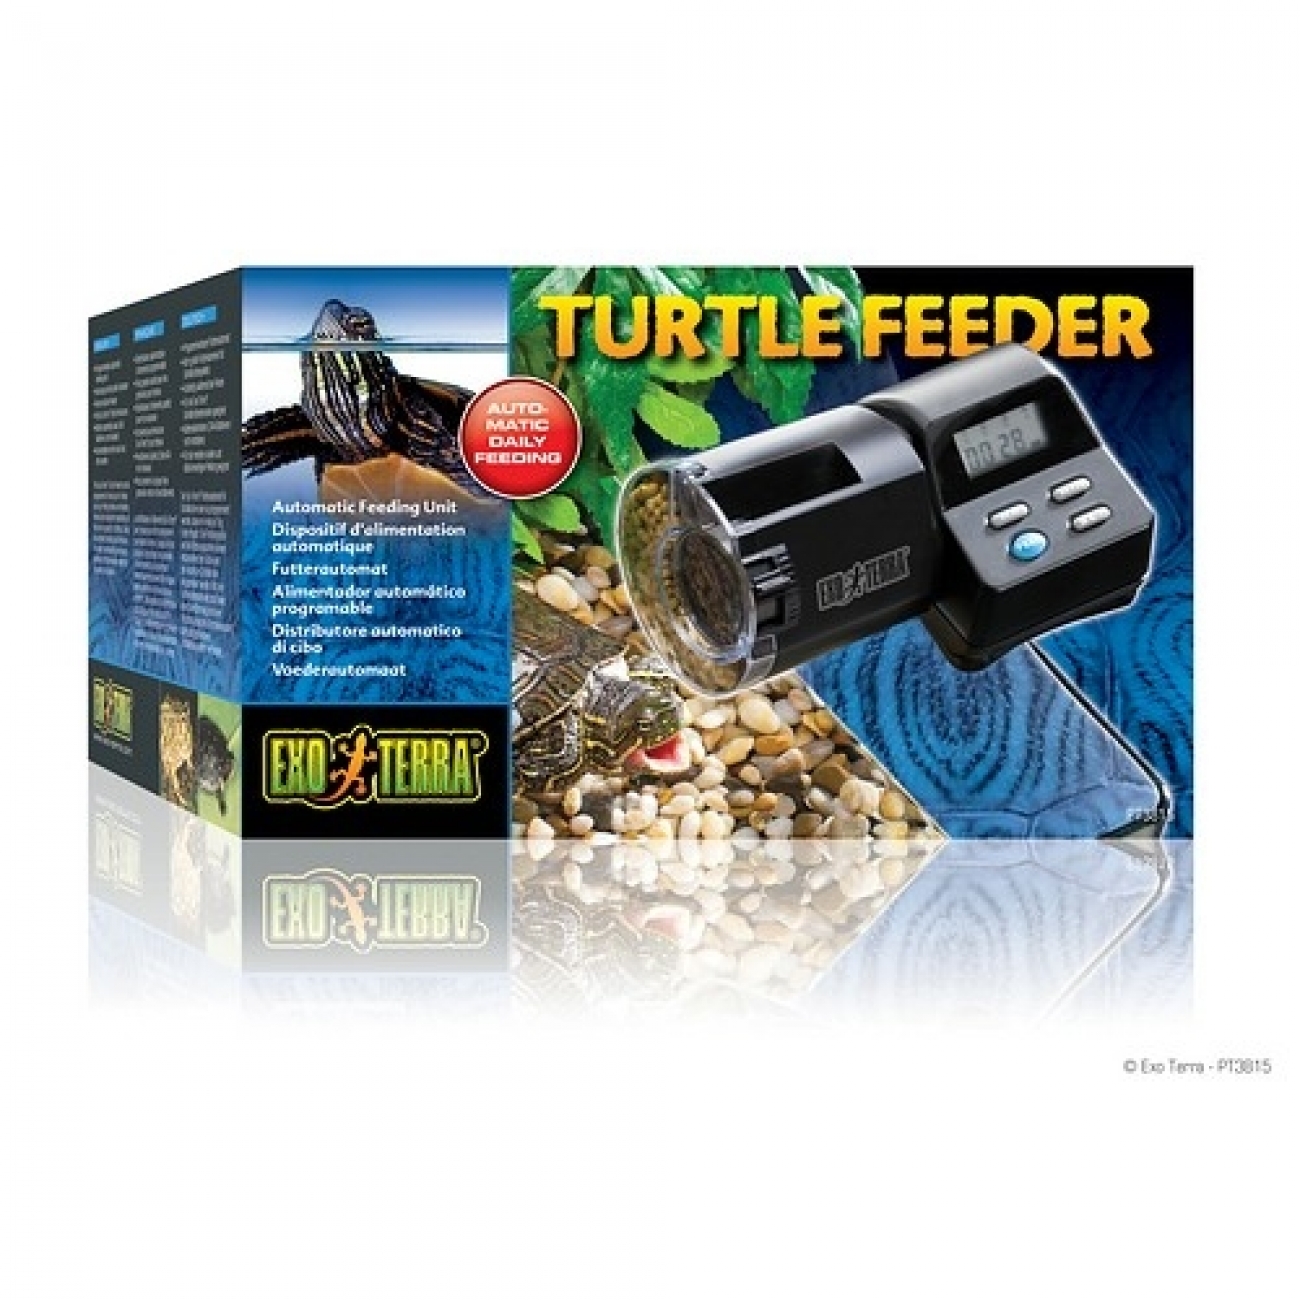 Turtle-feeder